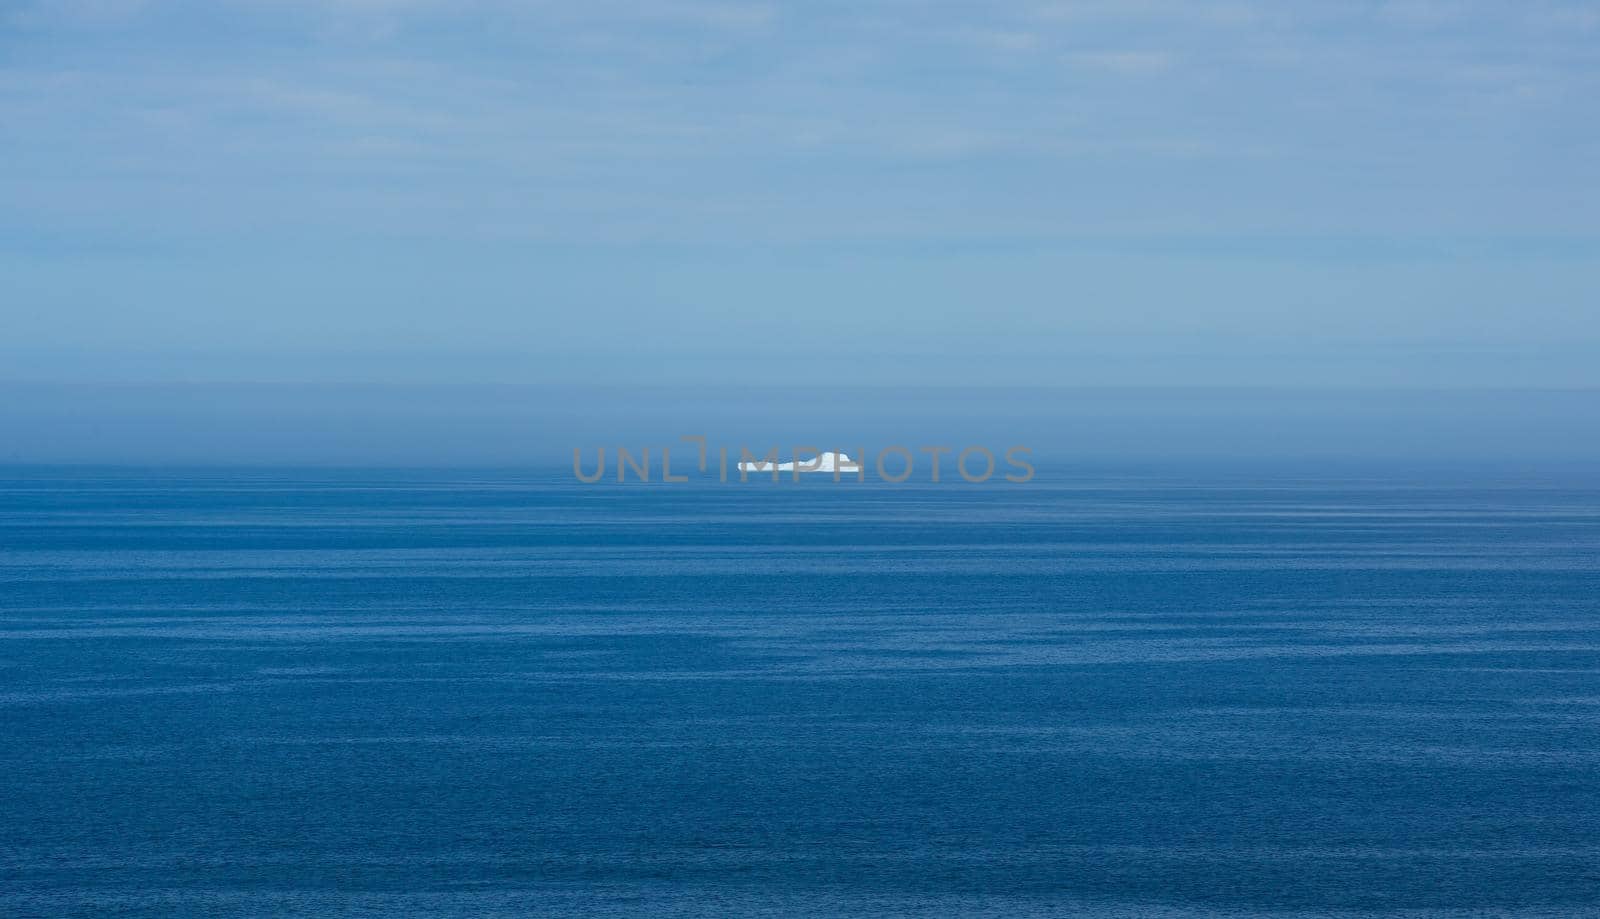 Iceberg in the North Atlantic by lisaldw